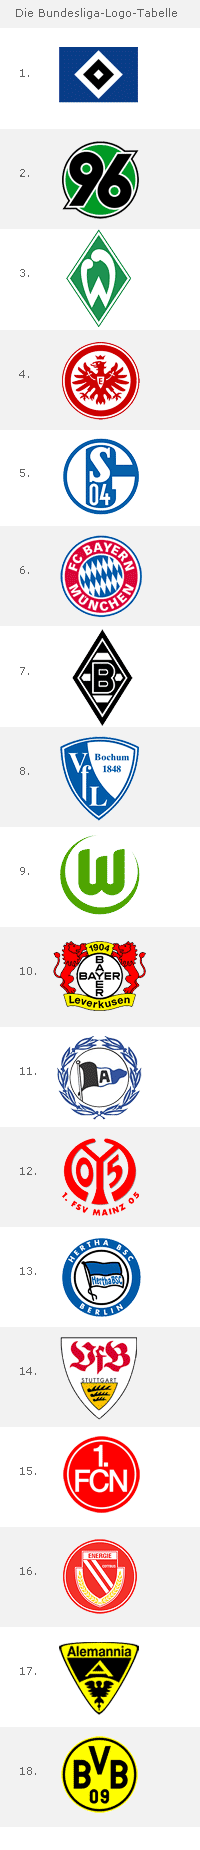 Die Fussball Bundesliga Logo Tabelle Design Tagebuch